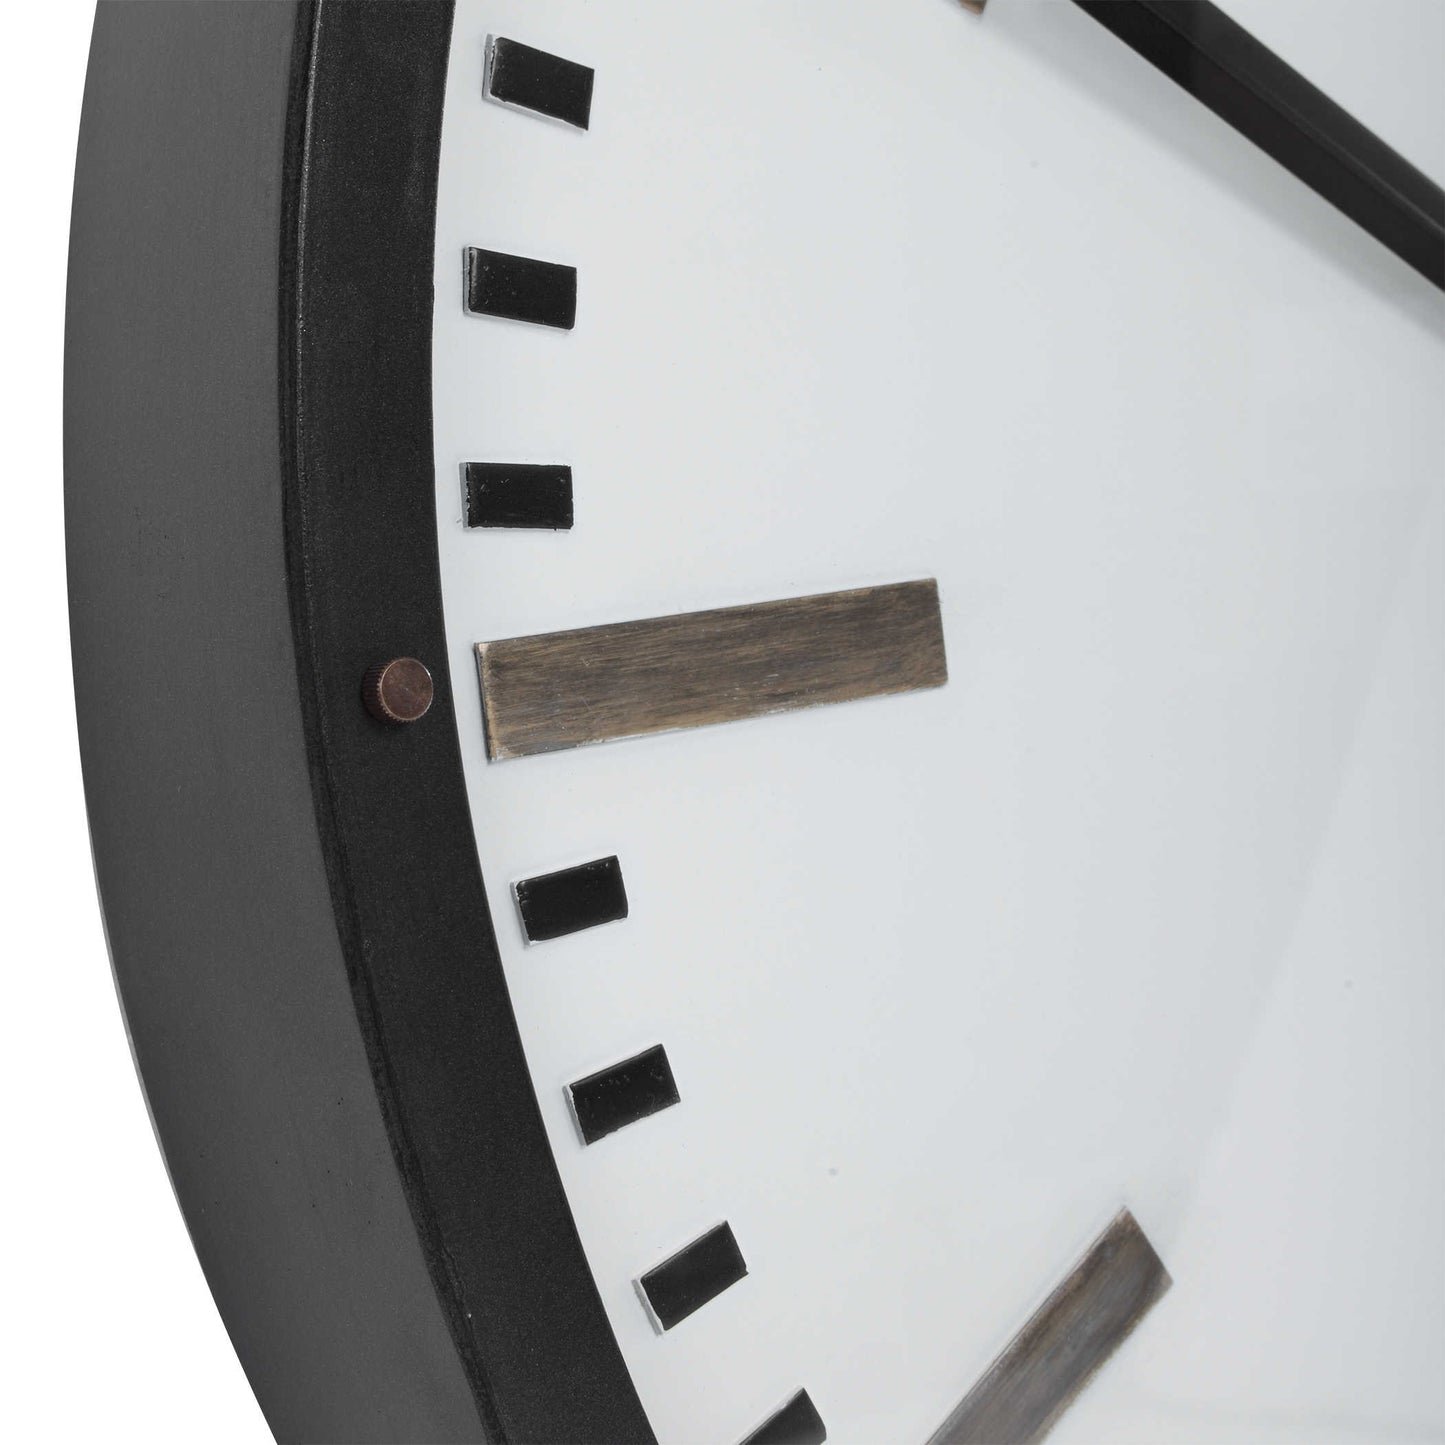 The Fleming Wall Clock